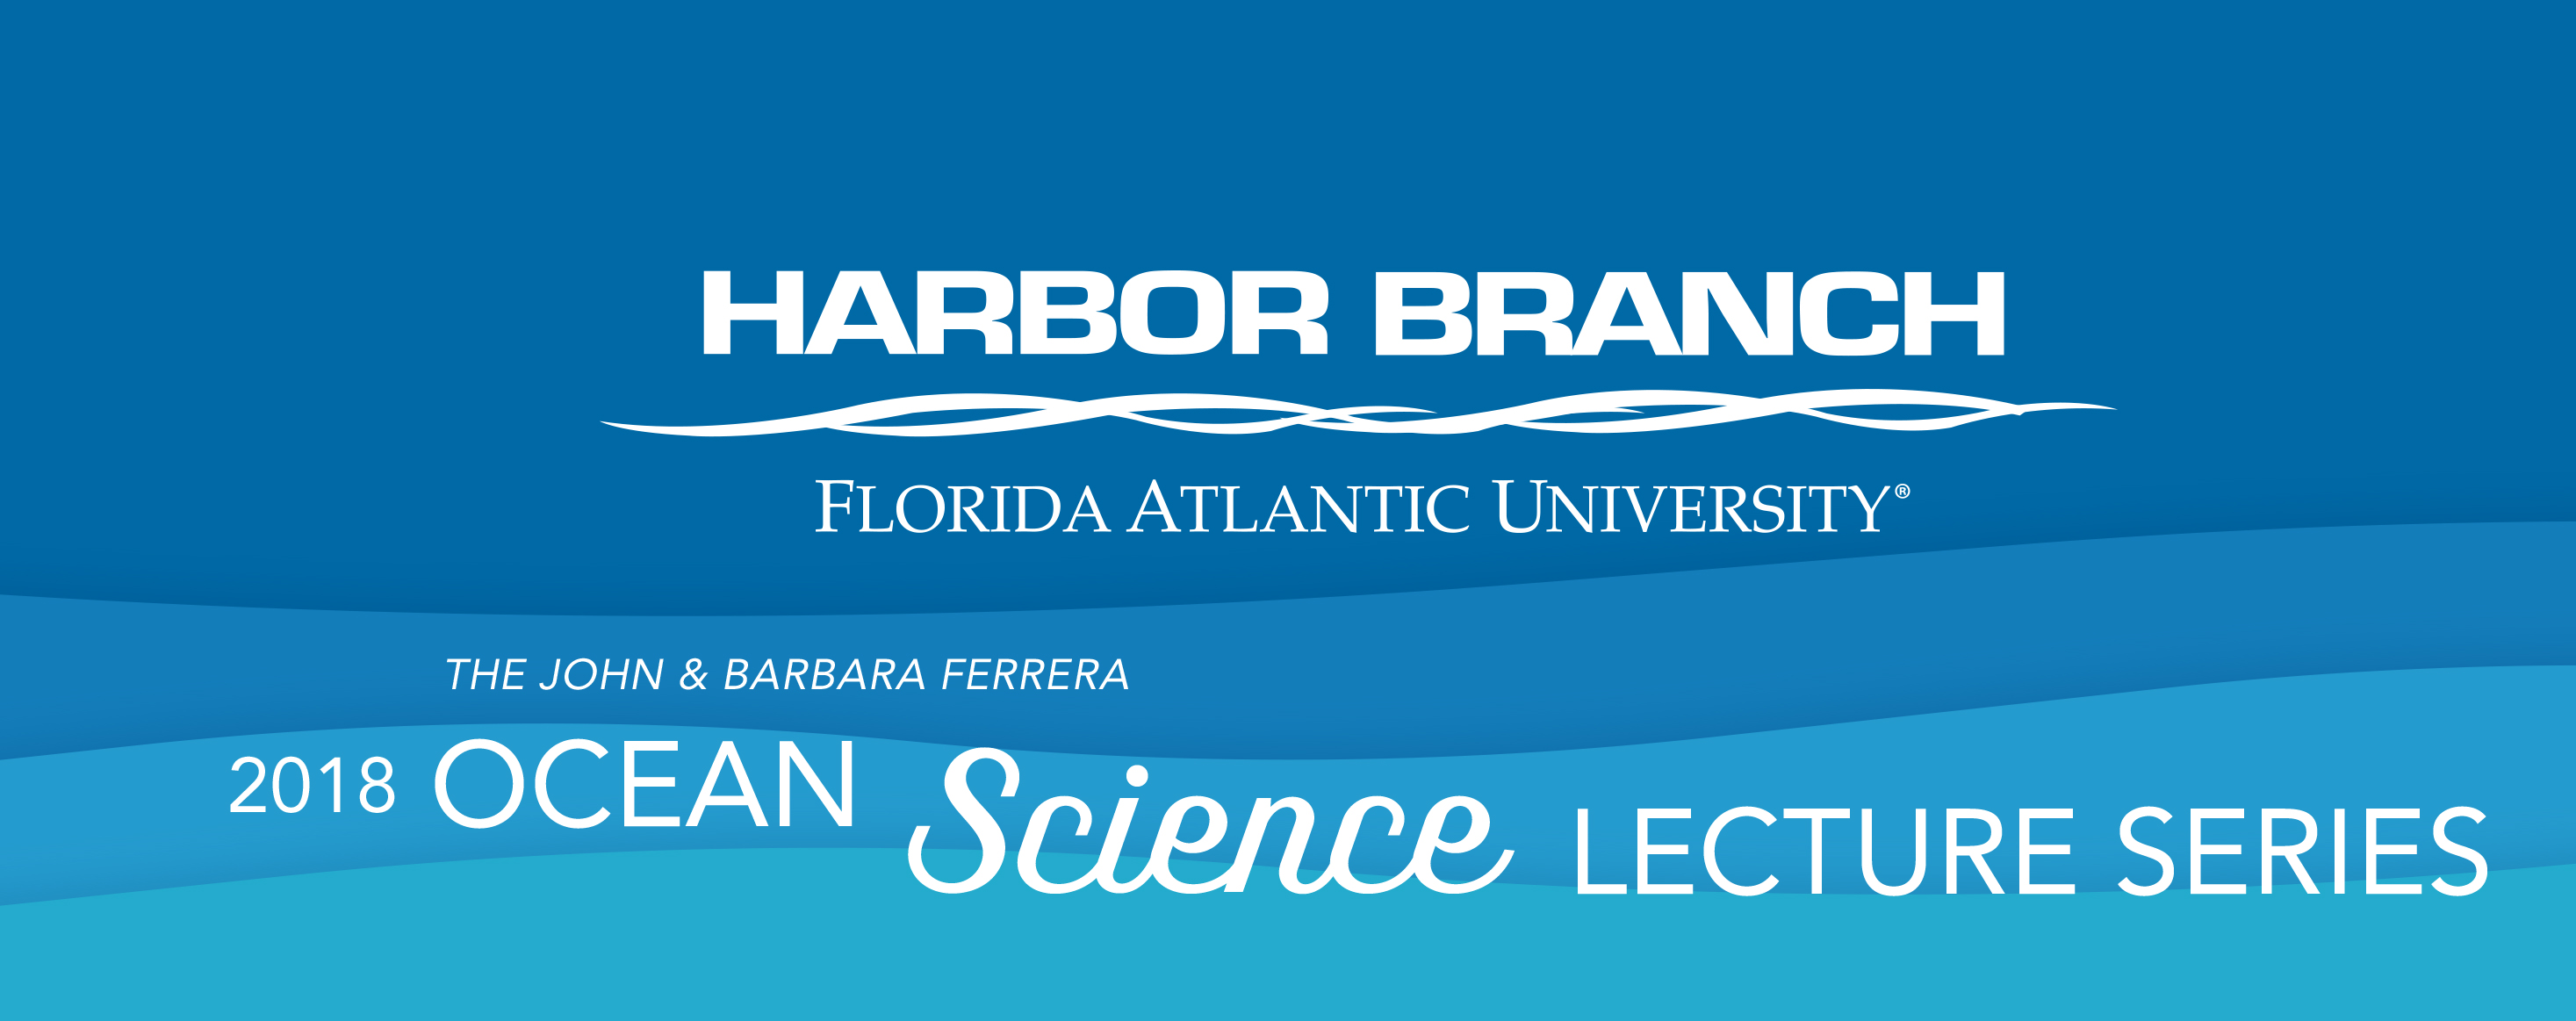 FAU Harbor Branch Ocean Science Lecture Series